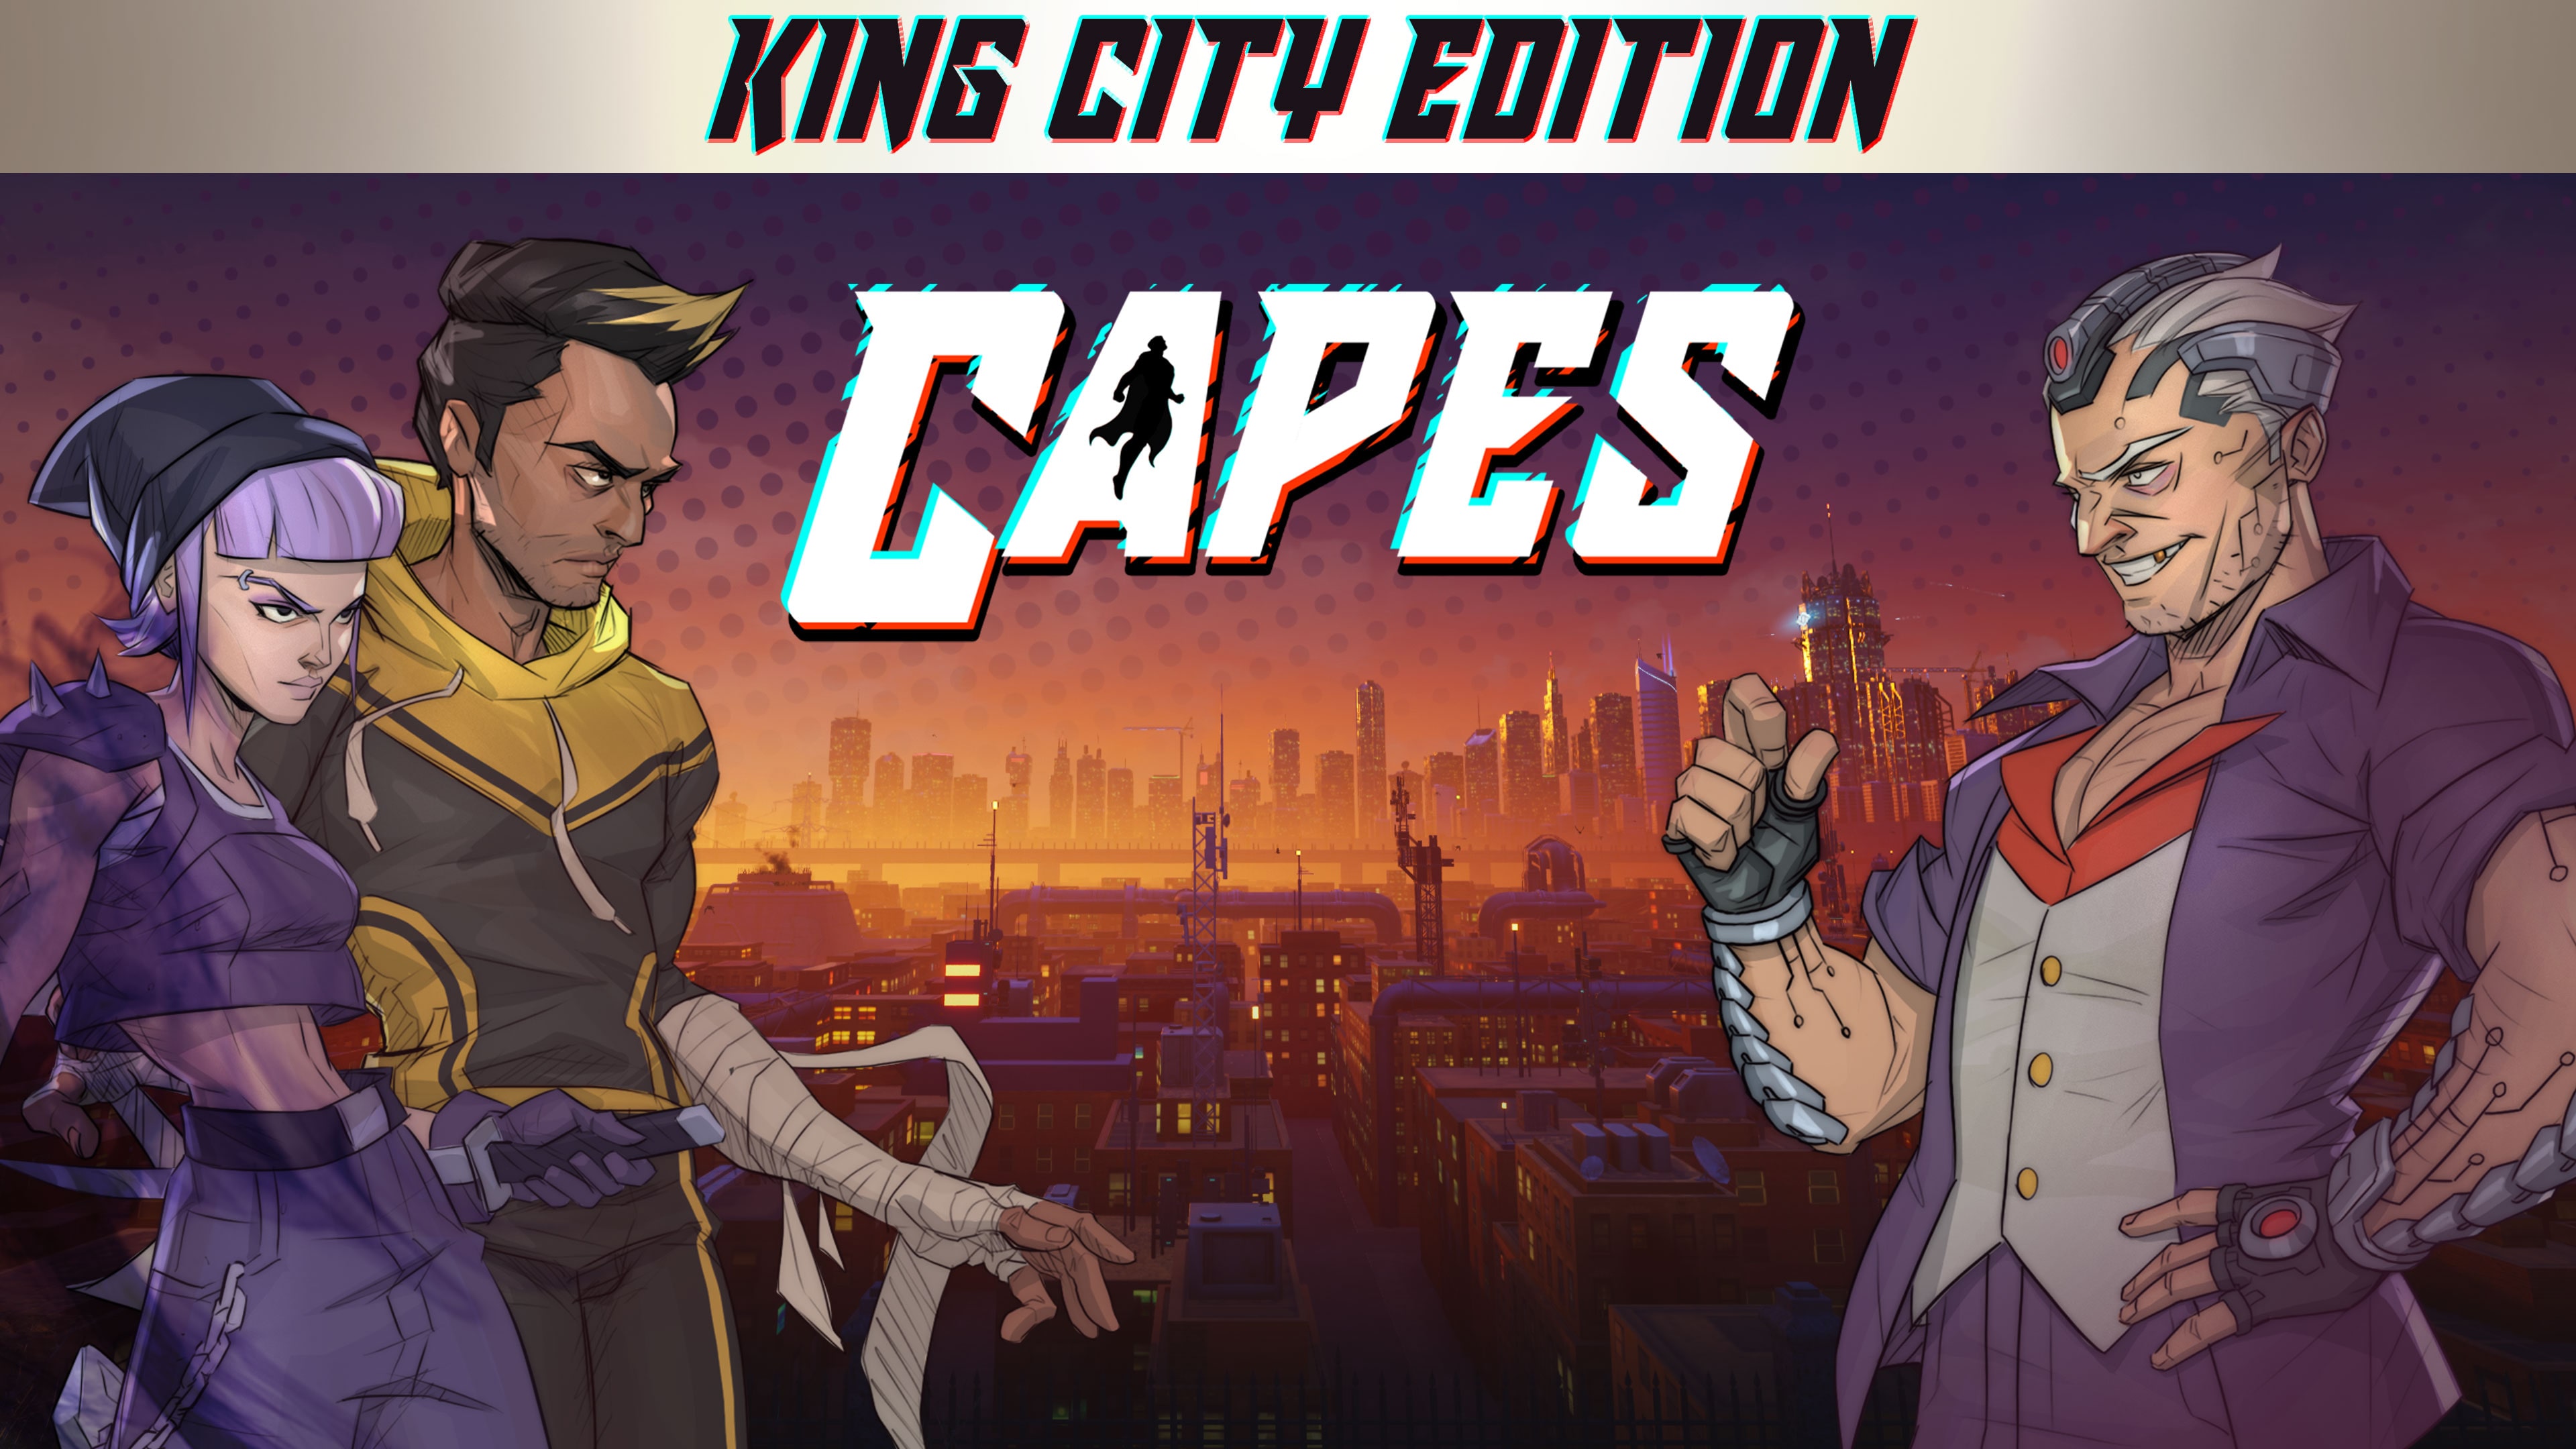 King City Edition